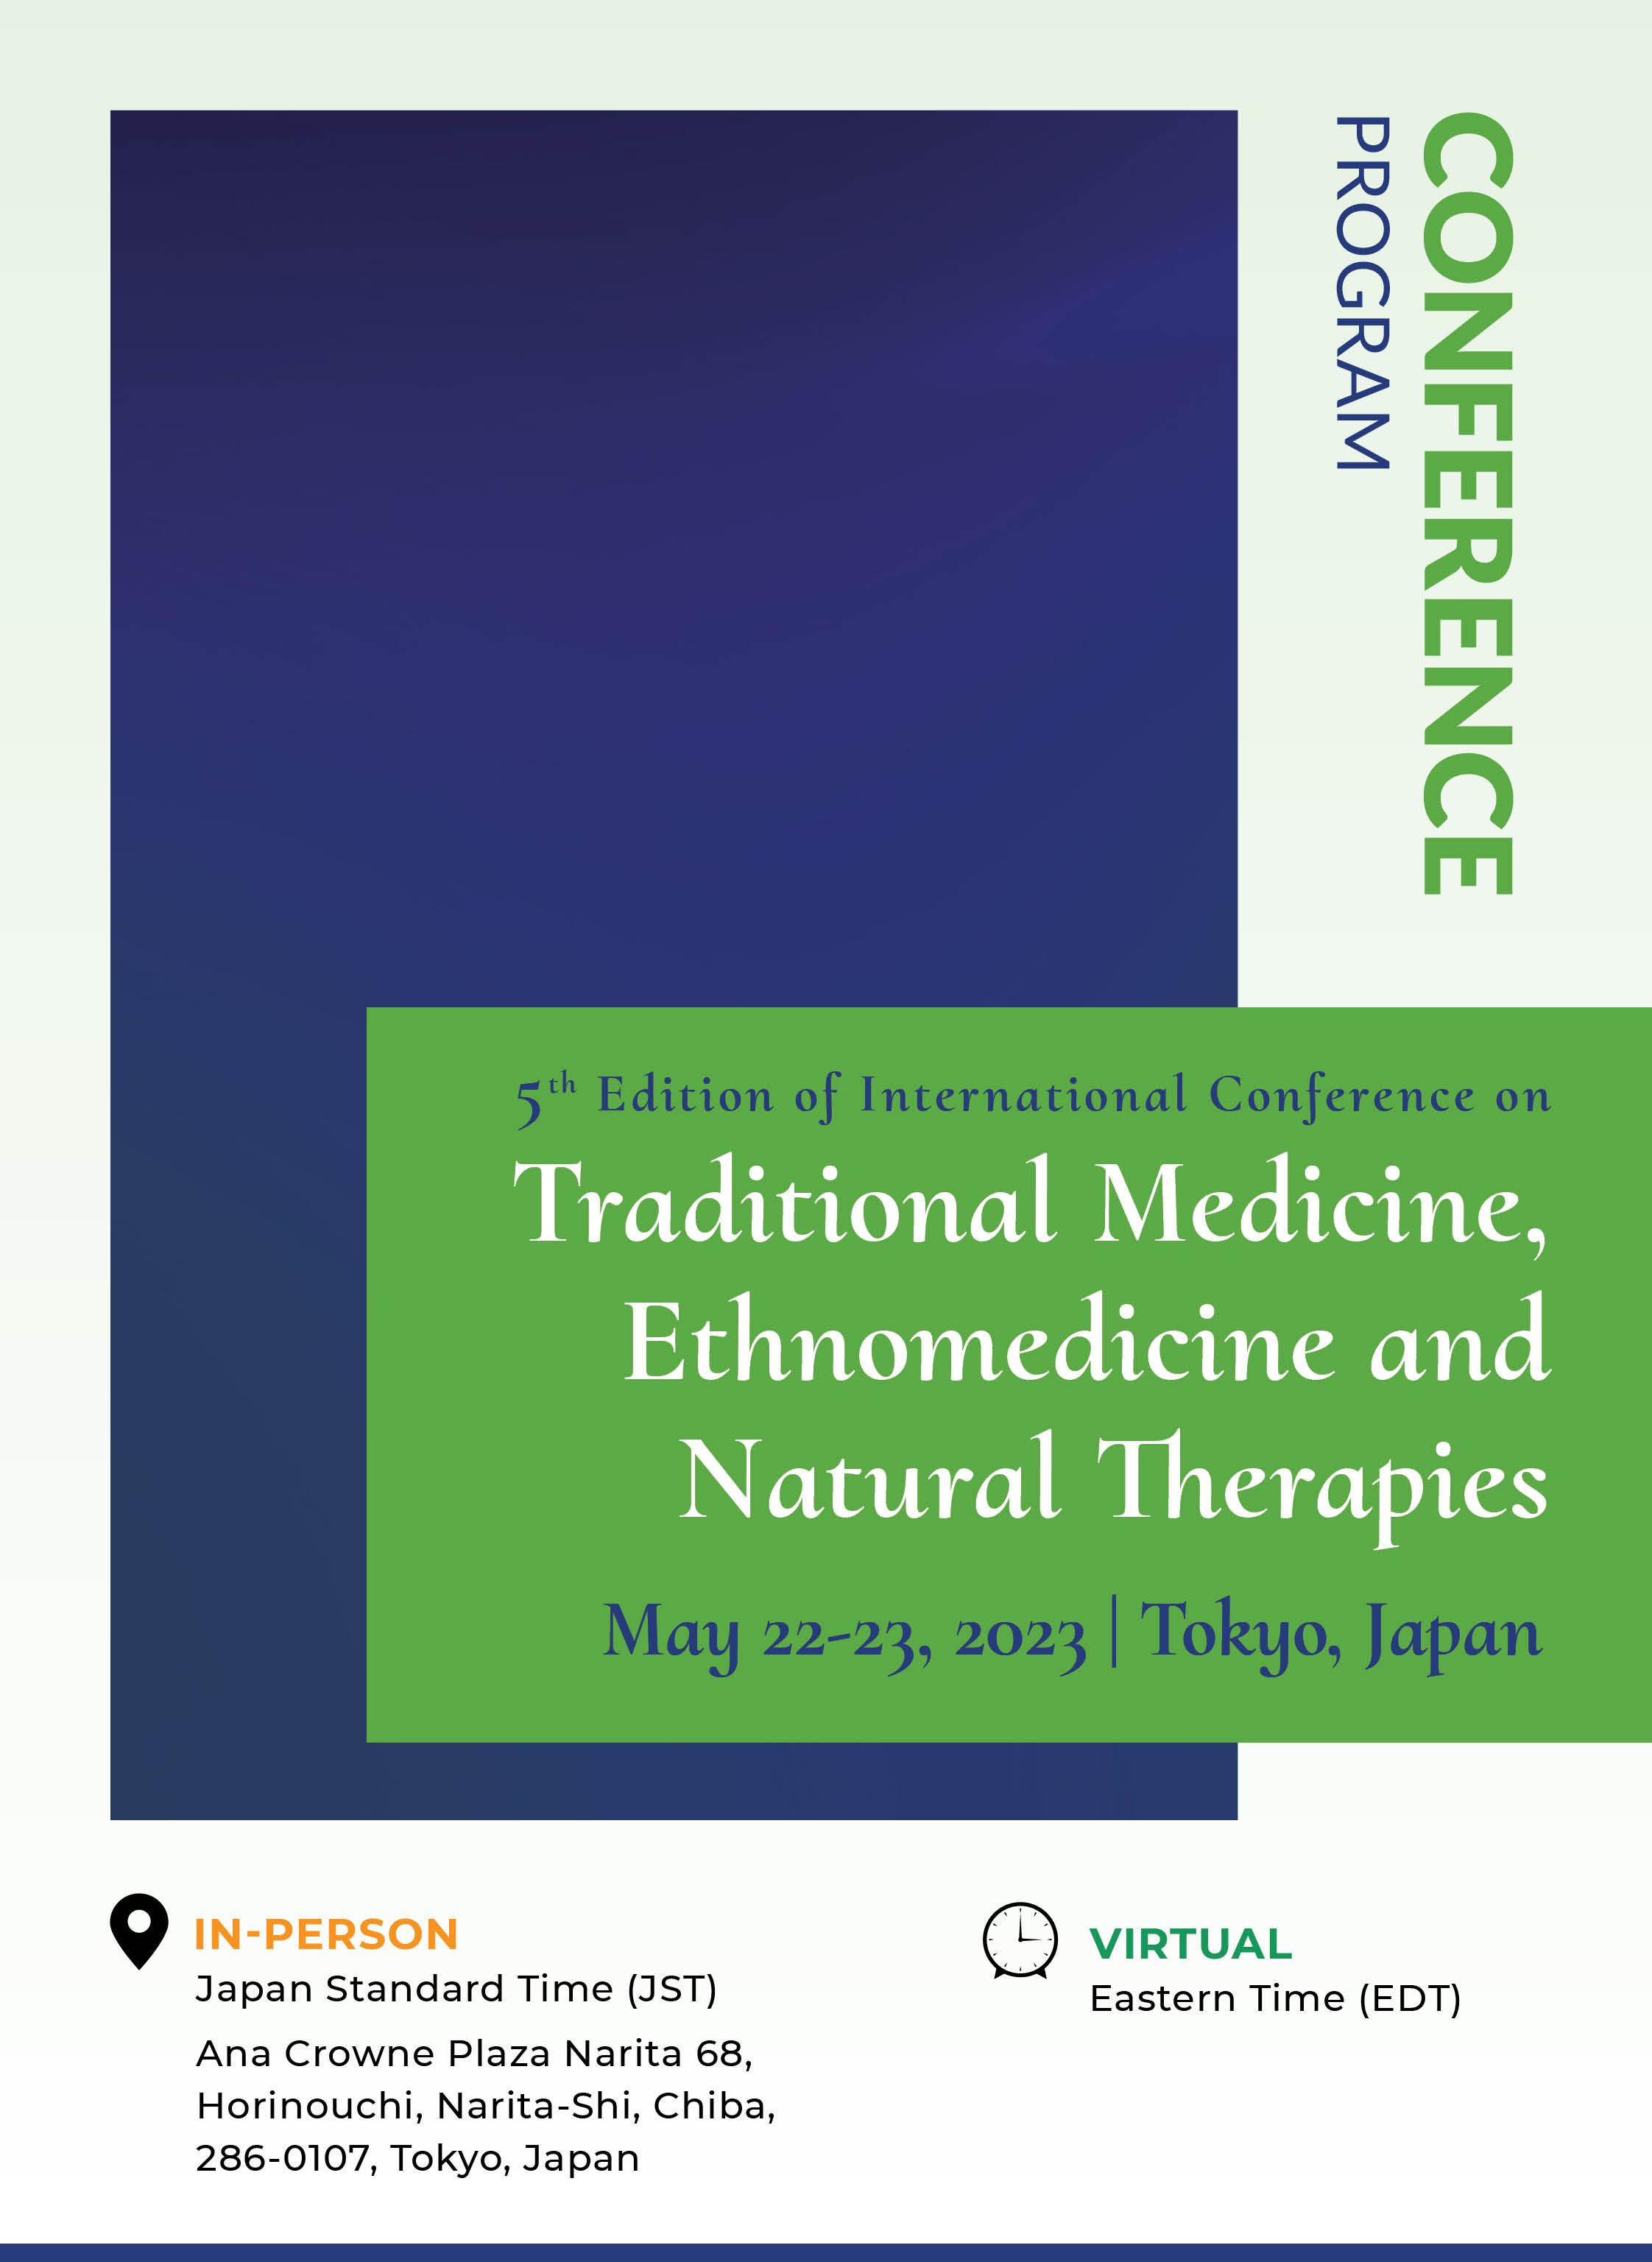 Traditional Medicine, Ethnomedicine and Natural Therapies | Tokyo, Japan Program